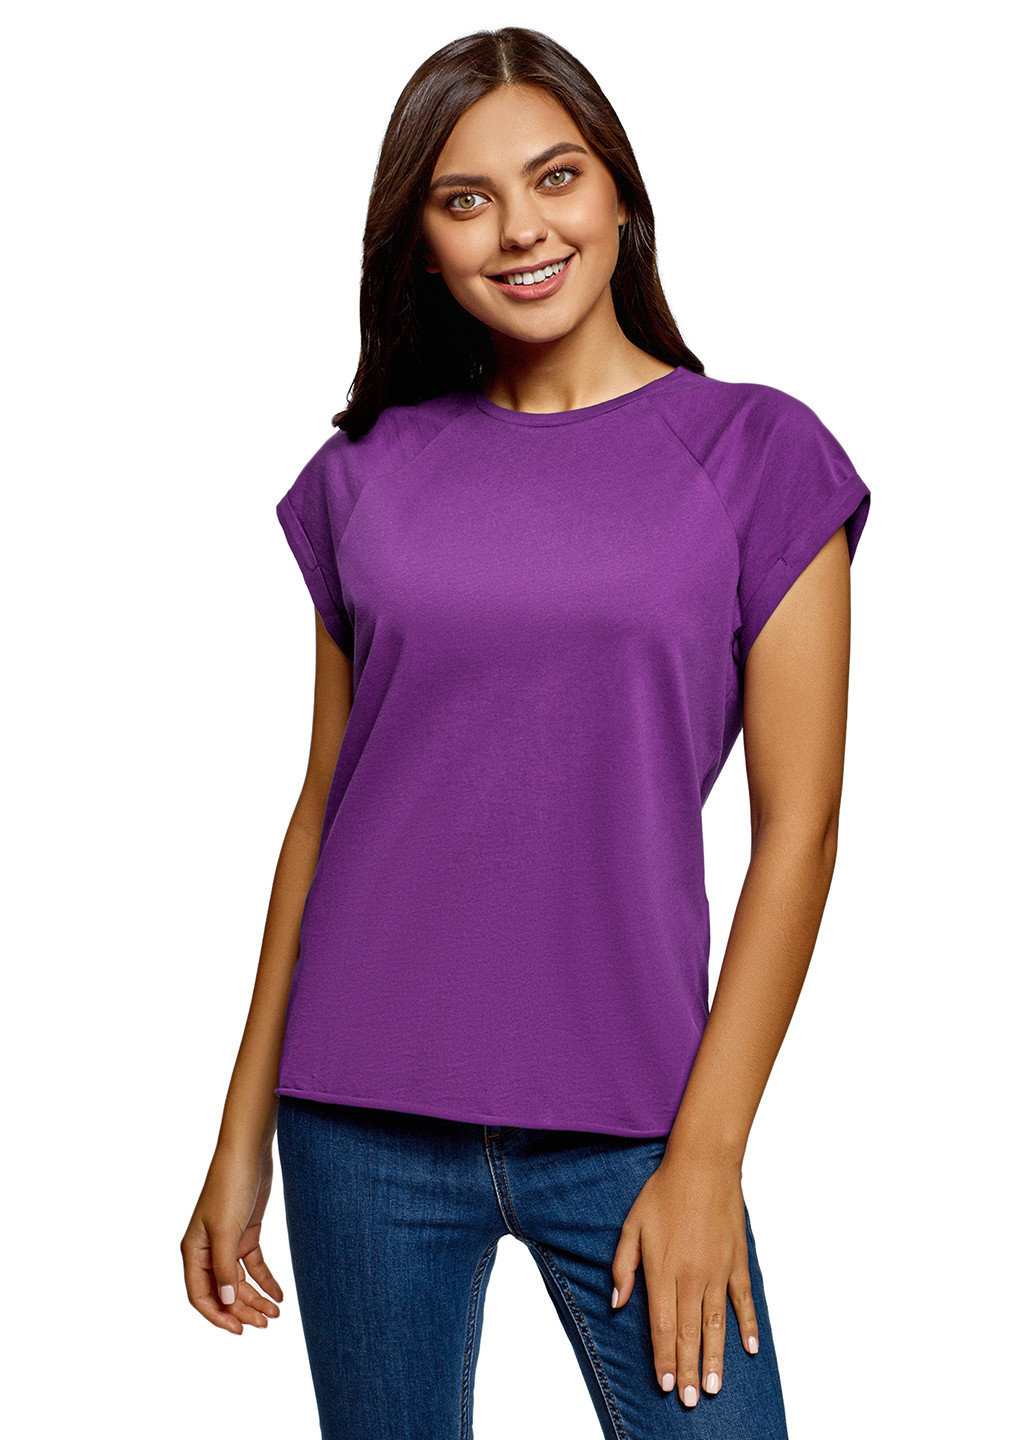 Фиолетовая летняя футболка Oodji